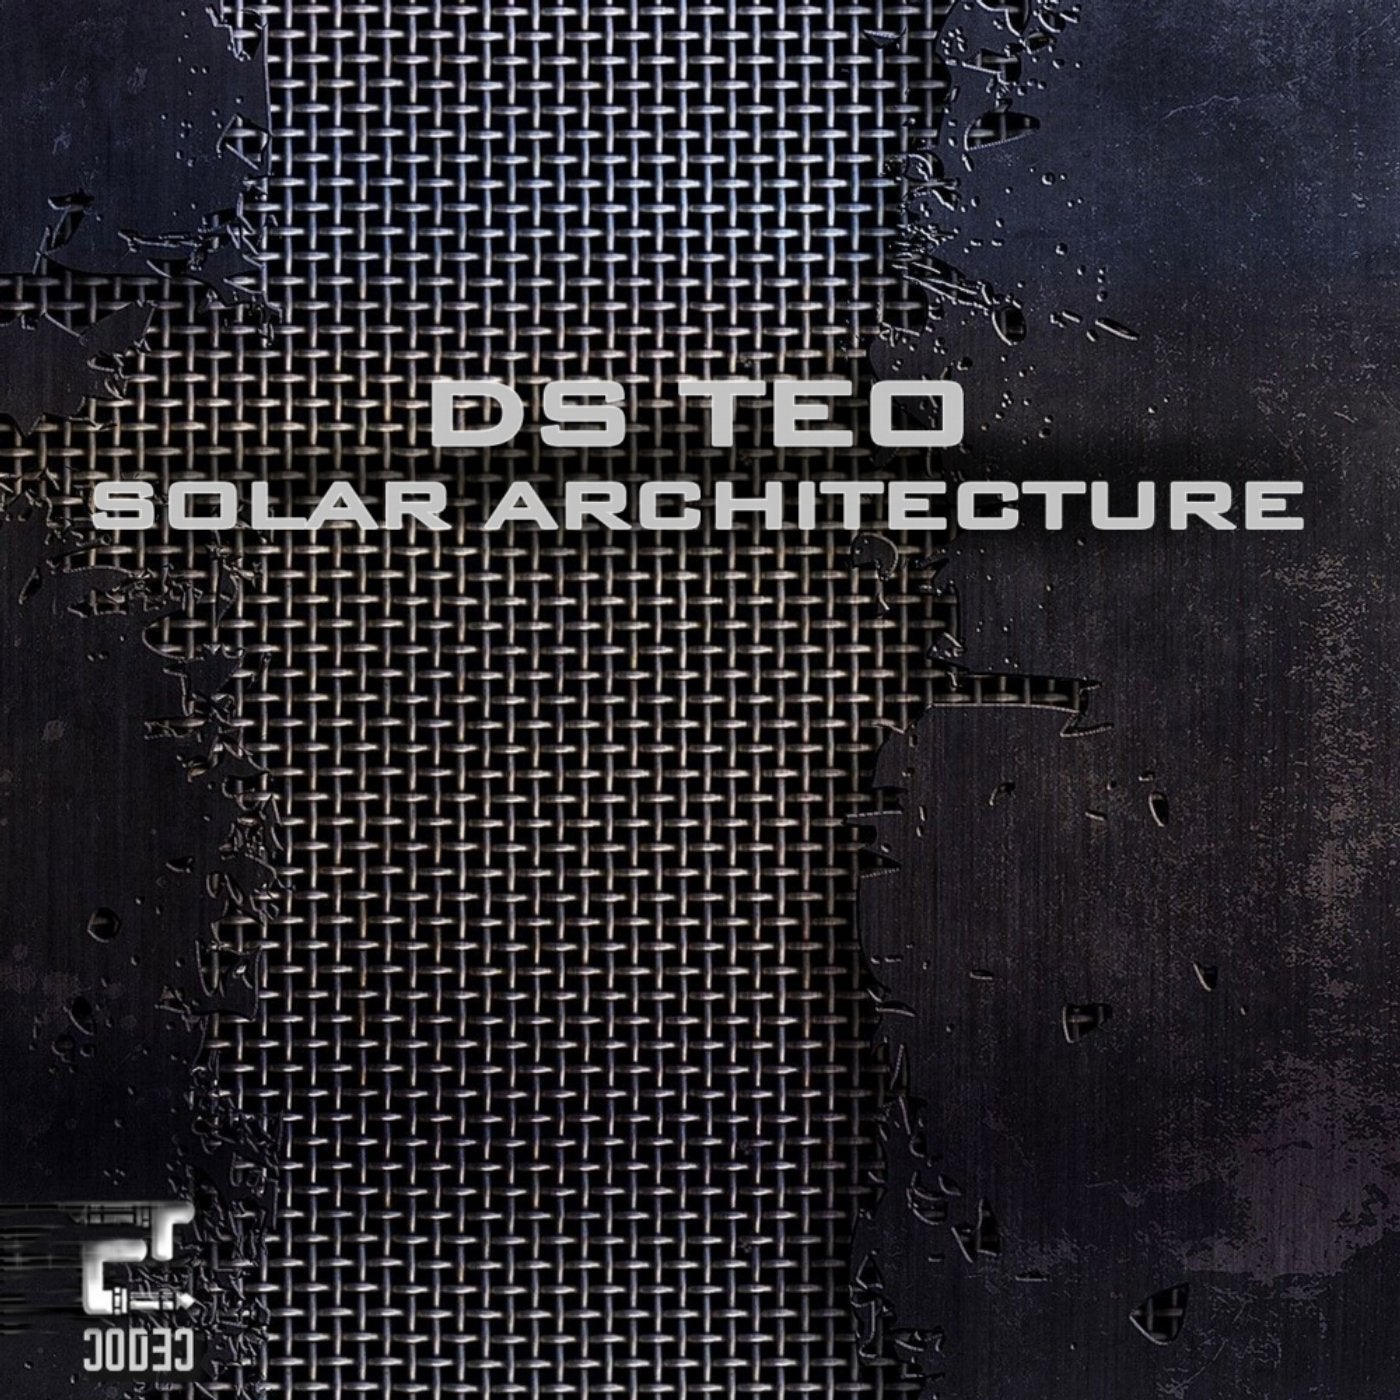 Solar Architecture EP